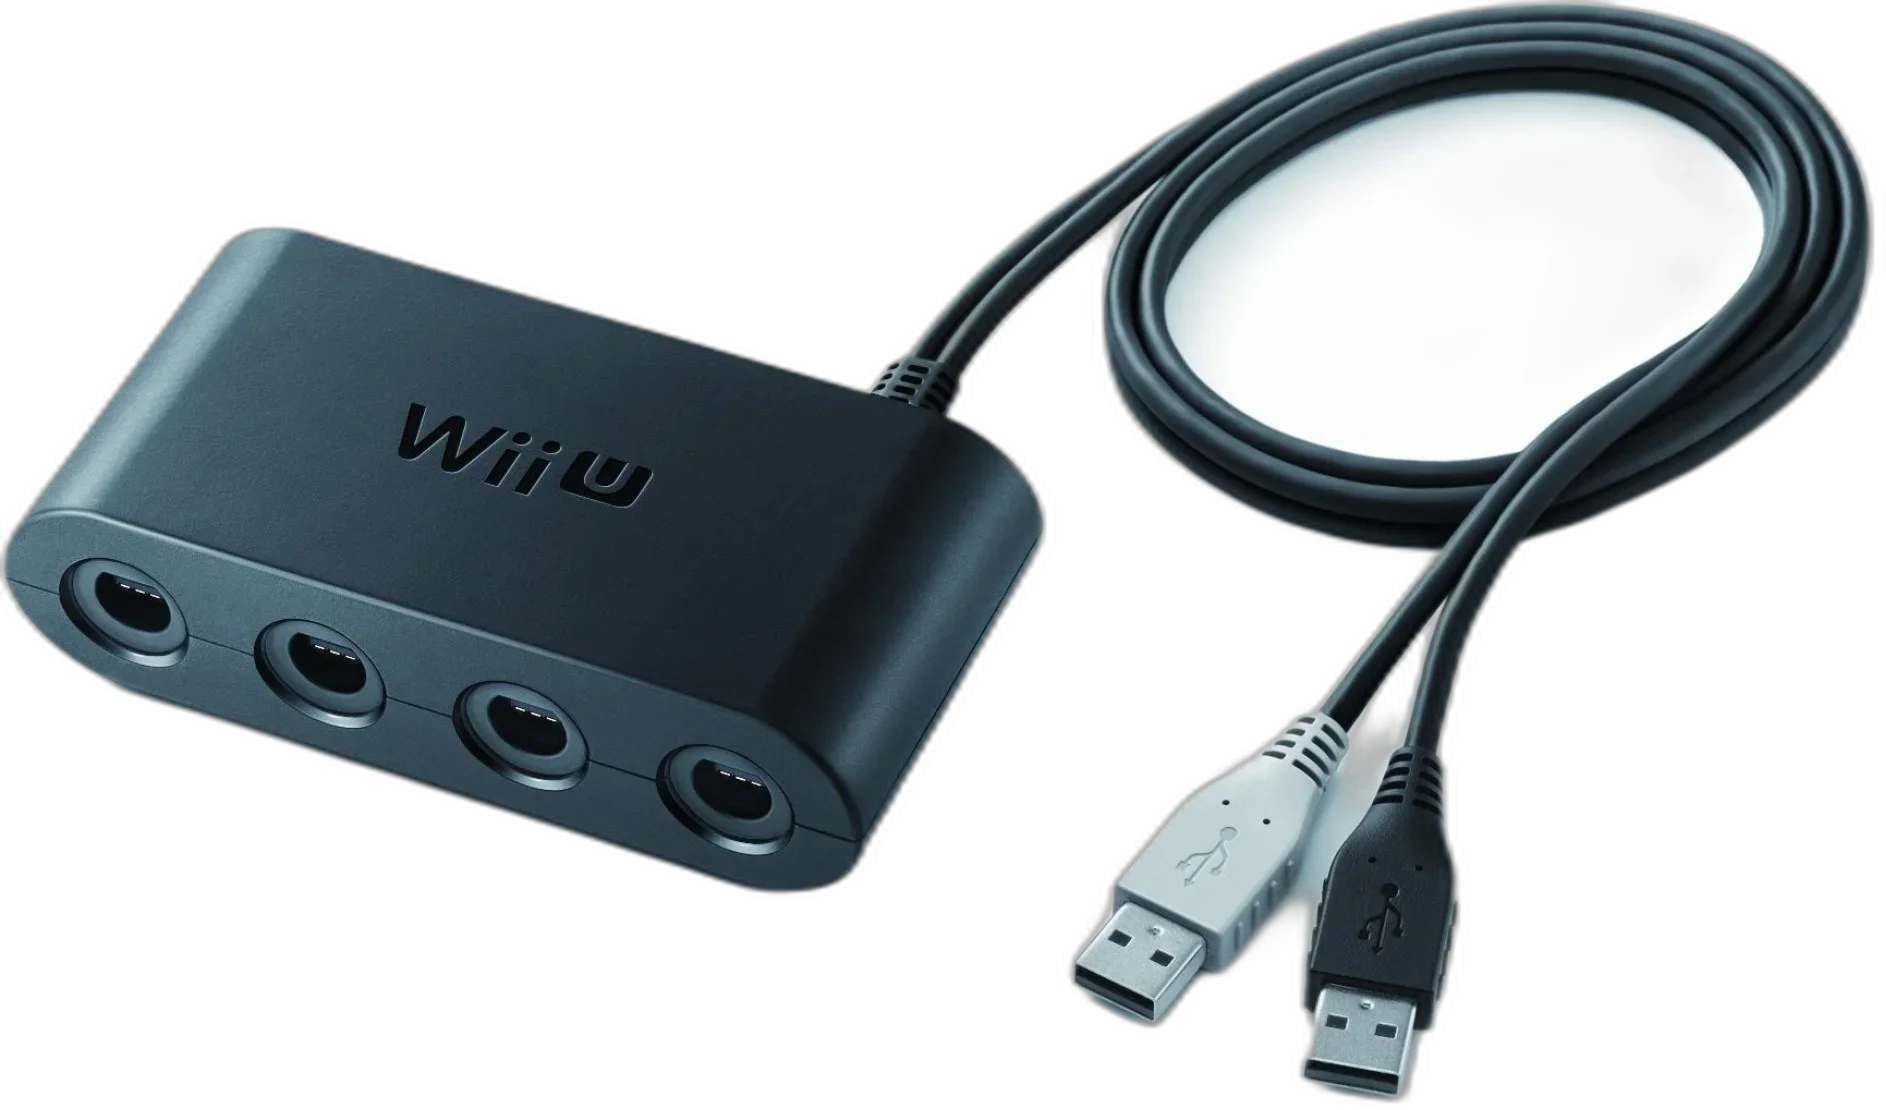  Nintendo Wii U GameCube Adapter [AUS]